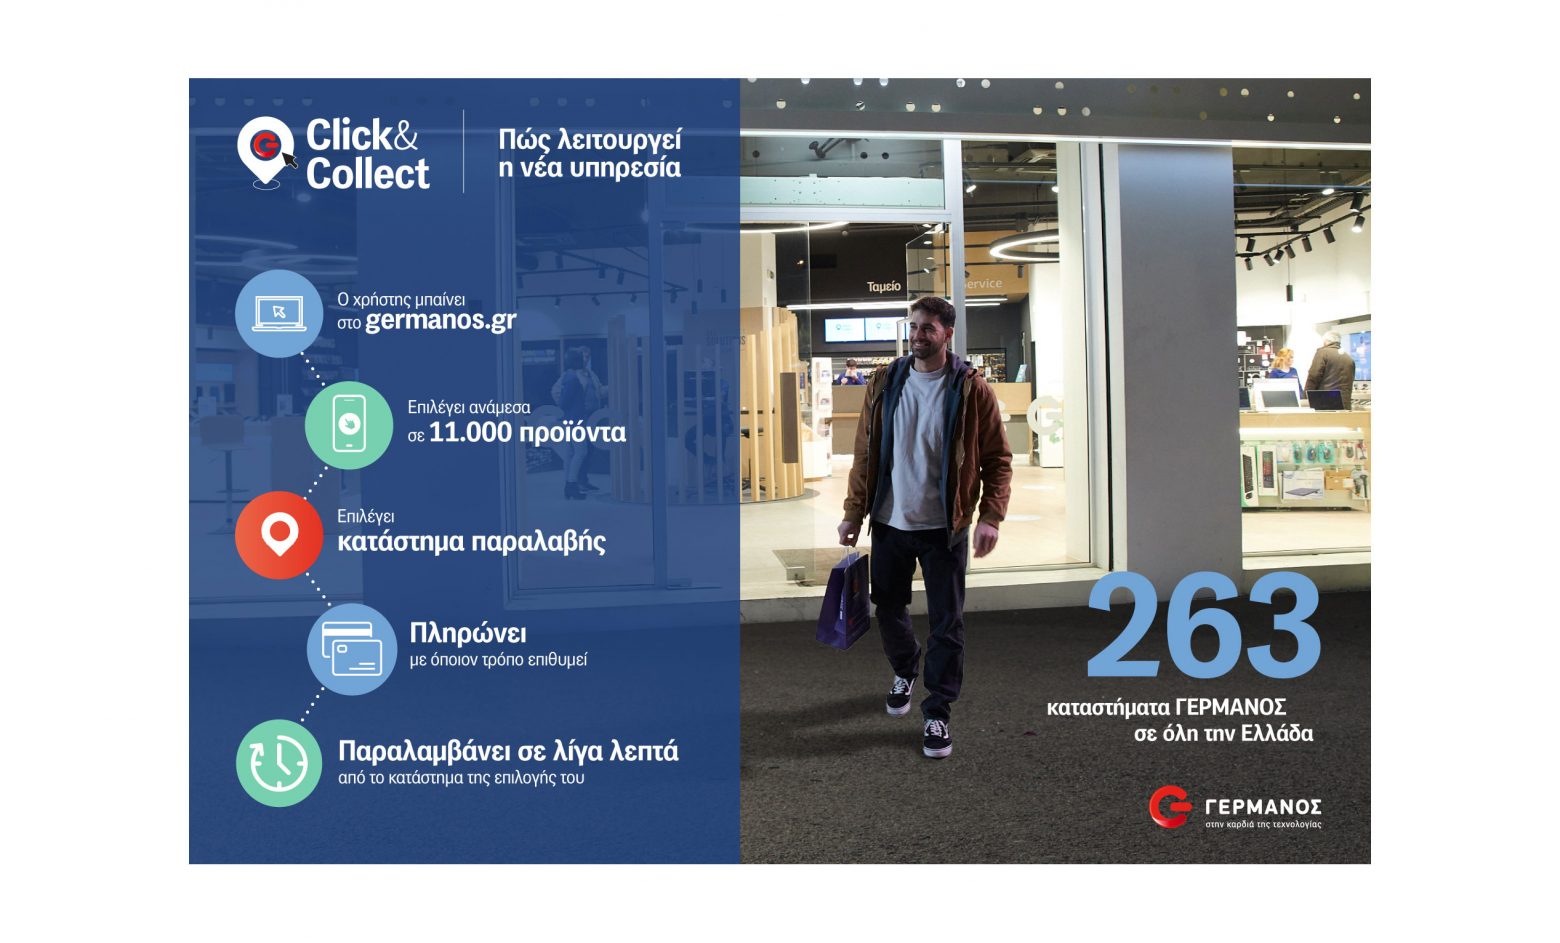 Click & Collect: Παραγγελία online και άμεση παραλαβή σε ένα από τα 263 καταστήματα ΓΕΡΜΑΝΟΣ σε όλη την Ελλάδα